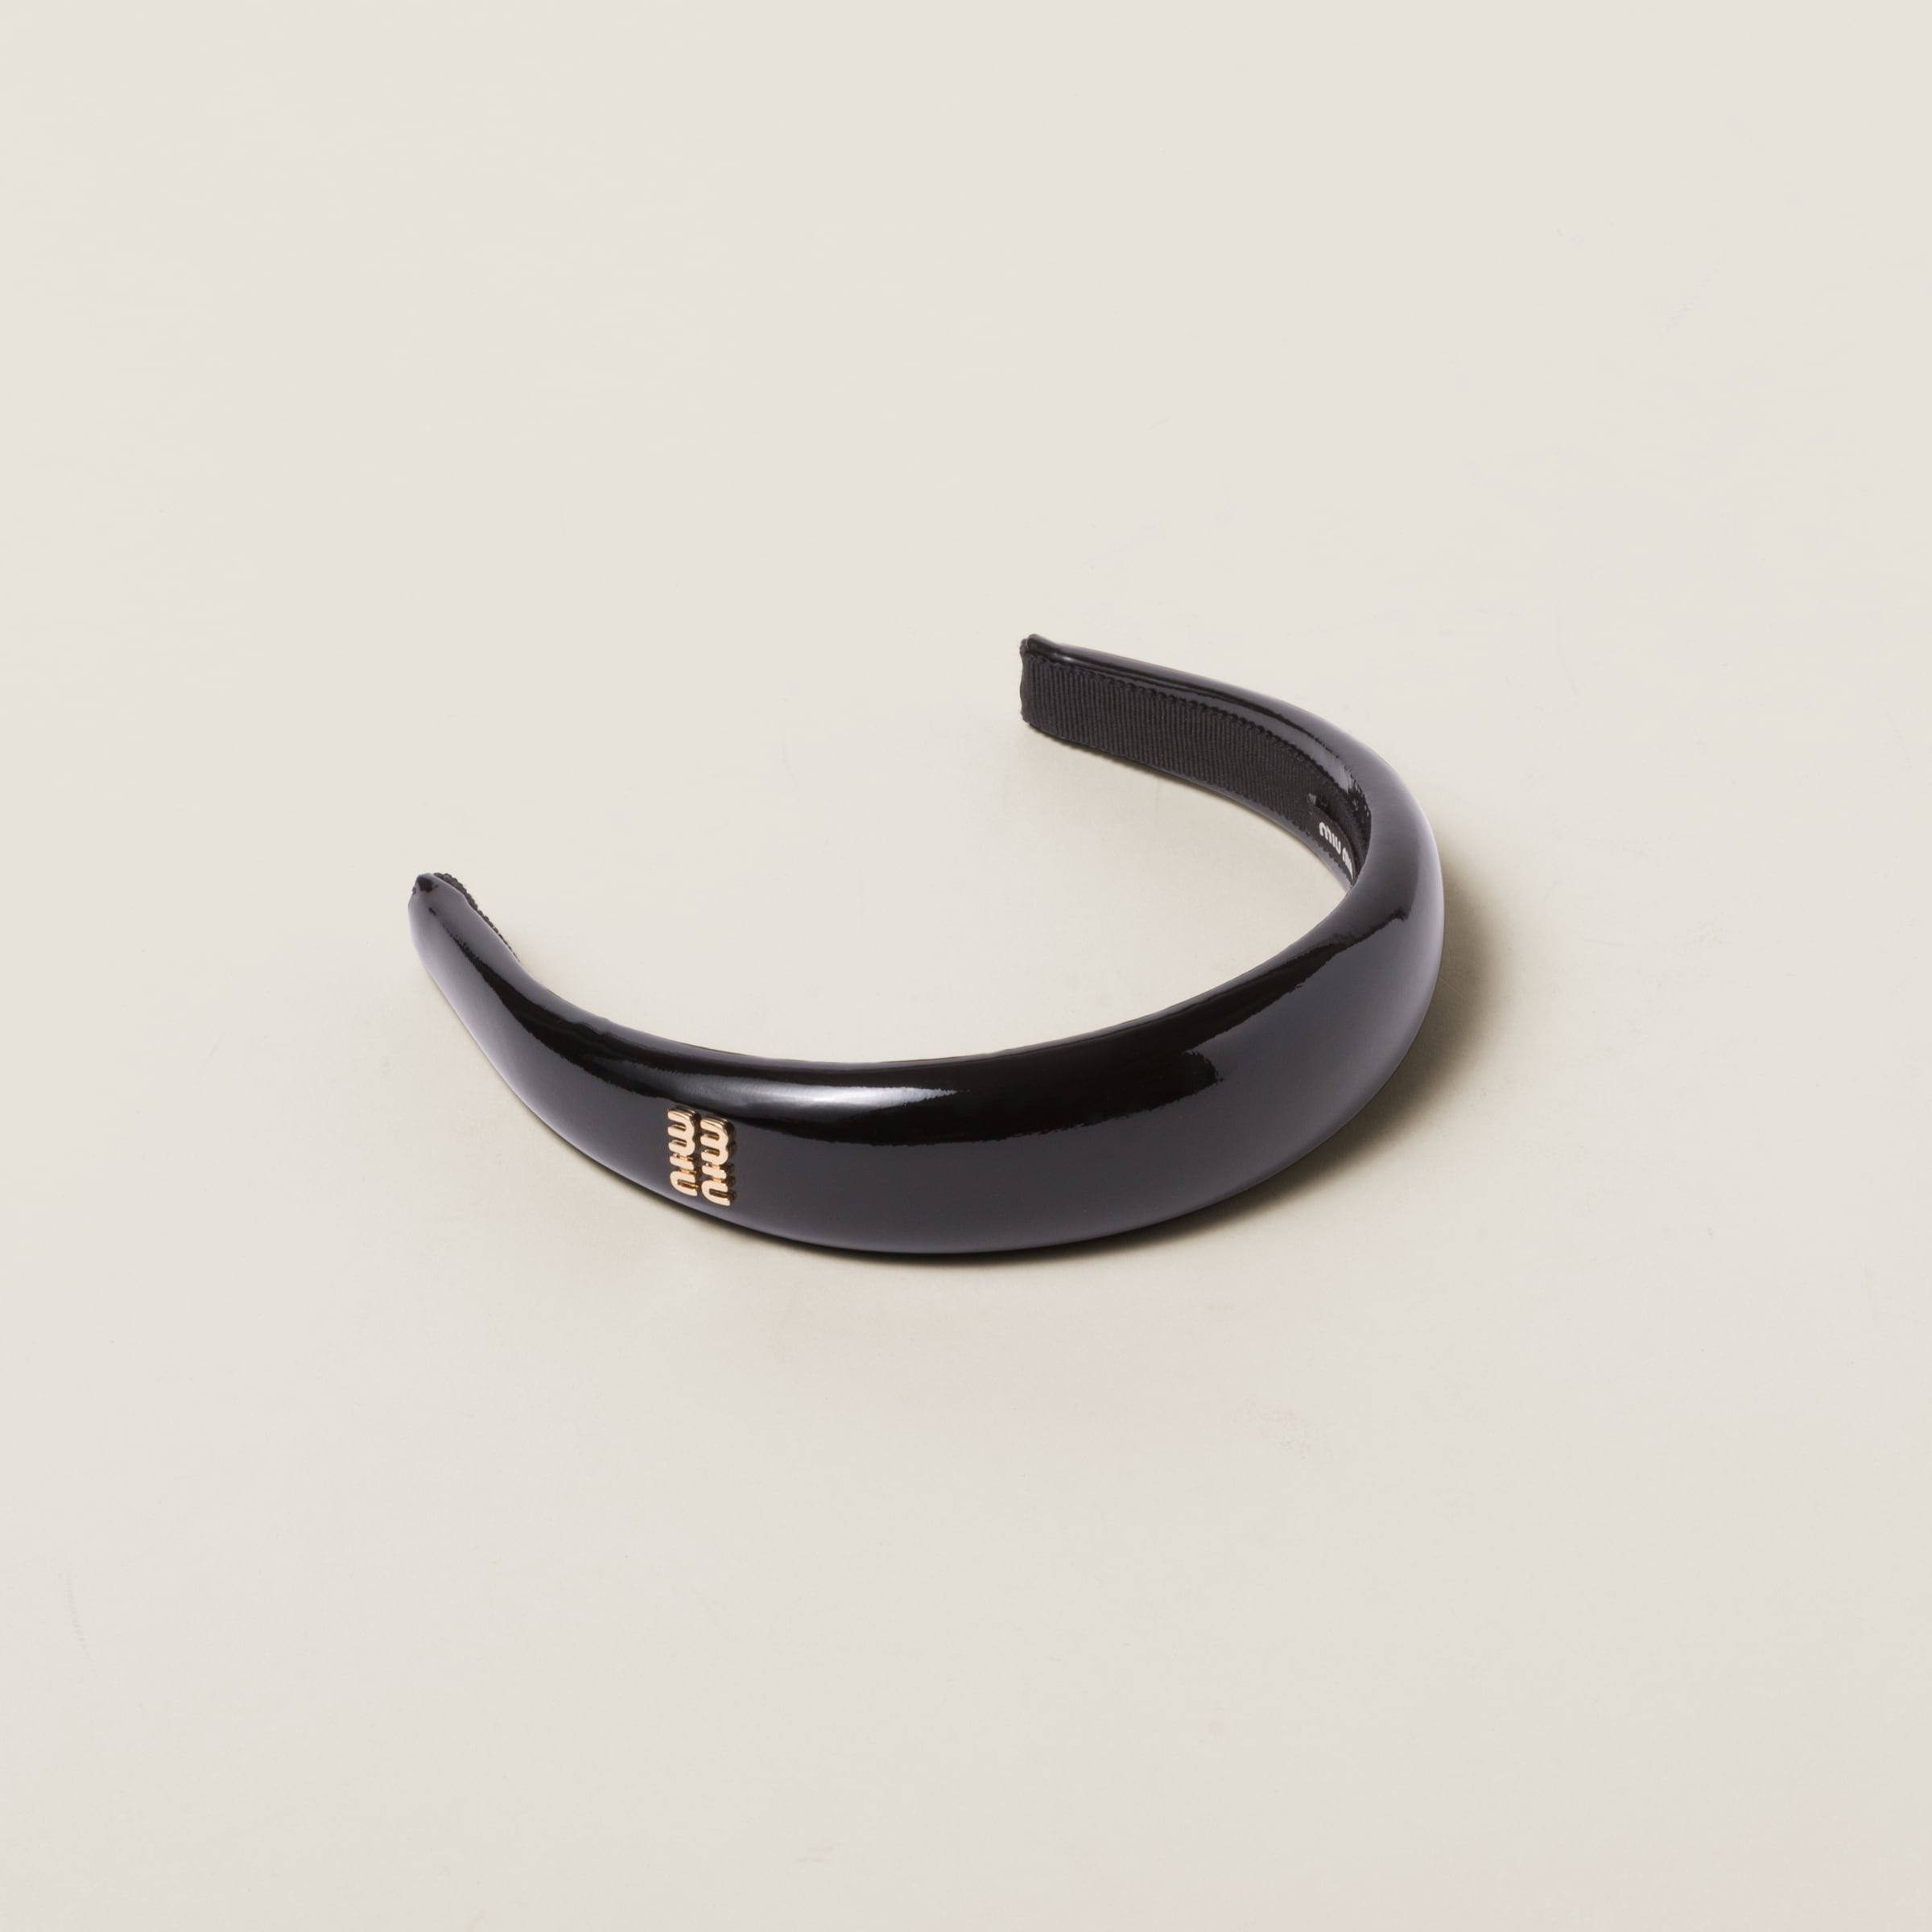 Patent leather headband - 1